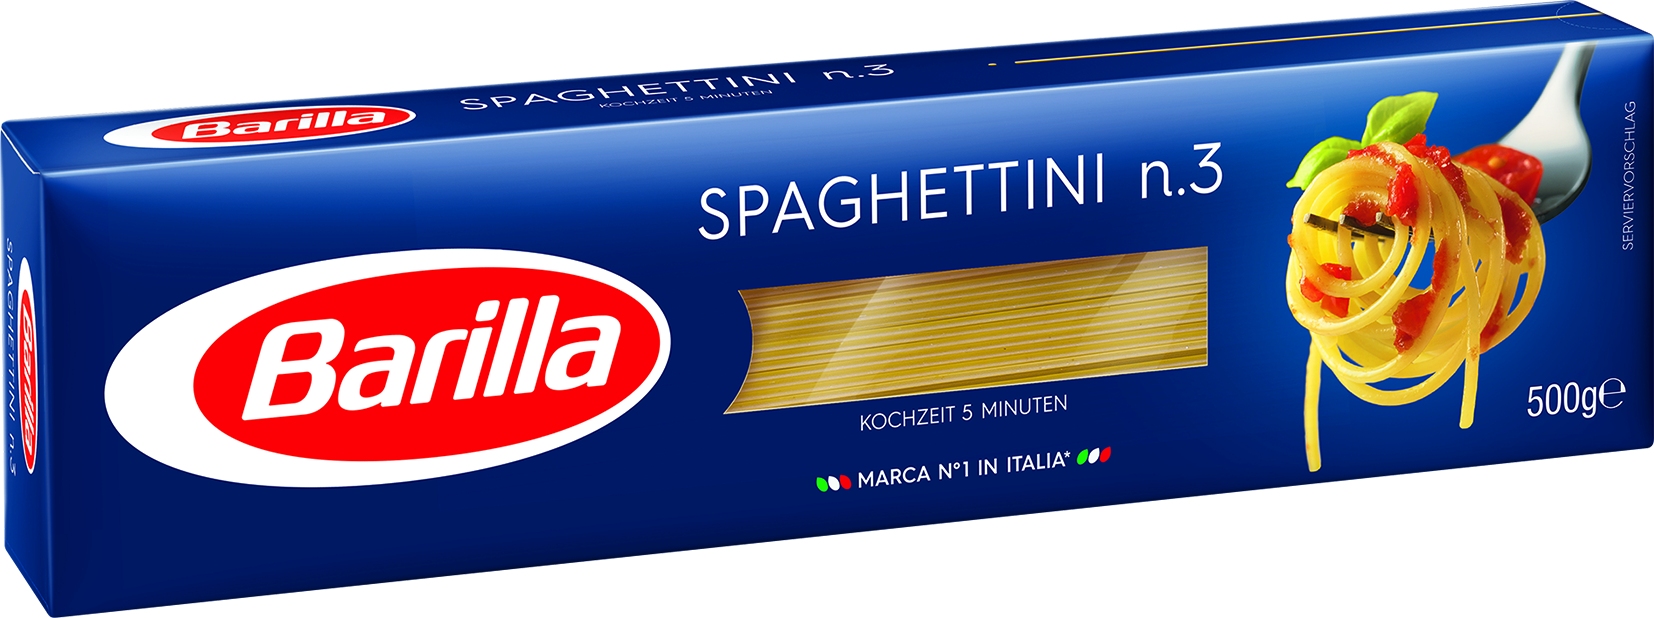 Spaghettini no.3